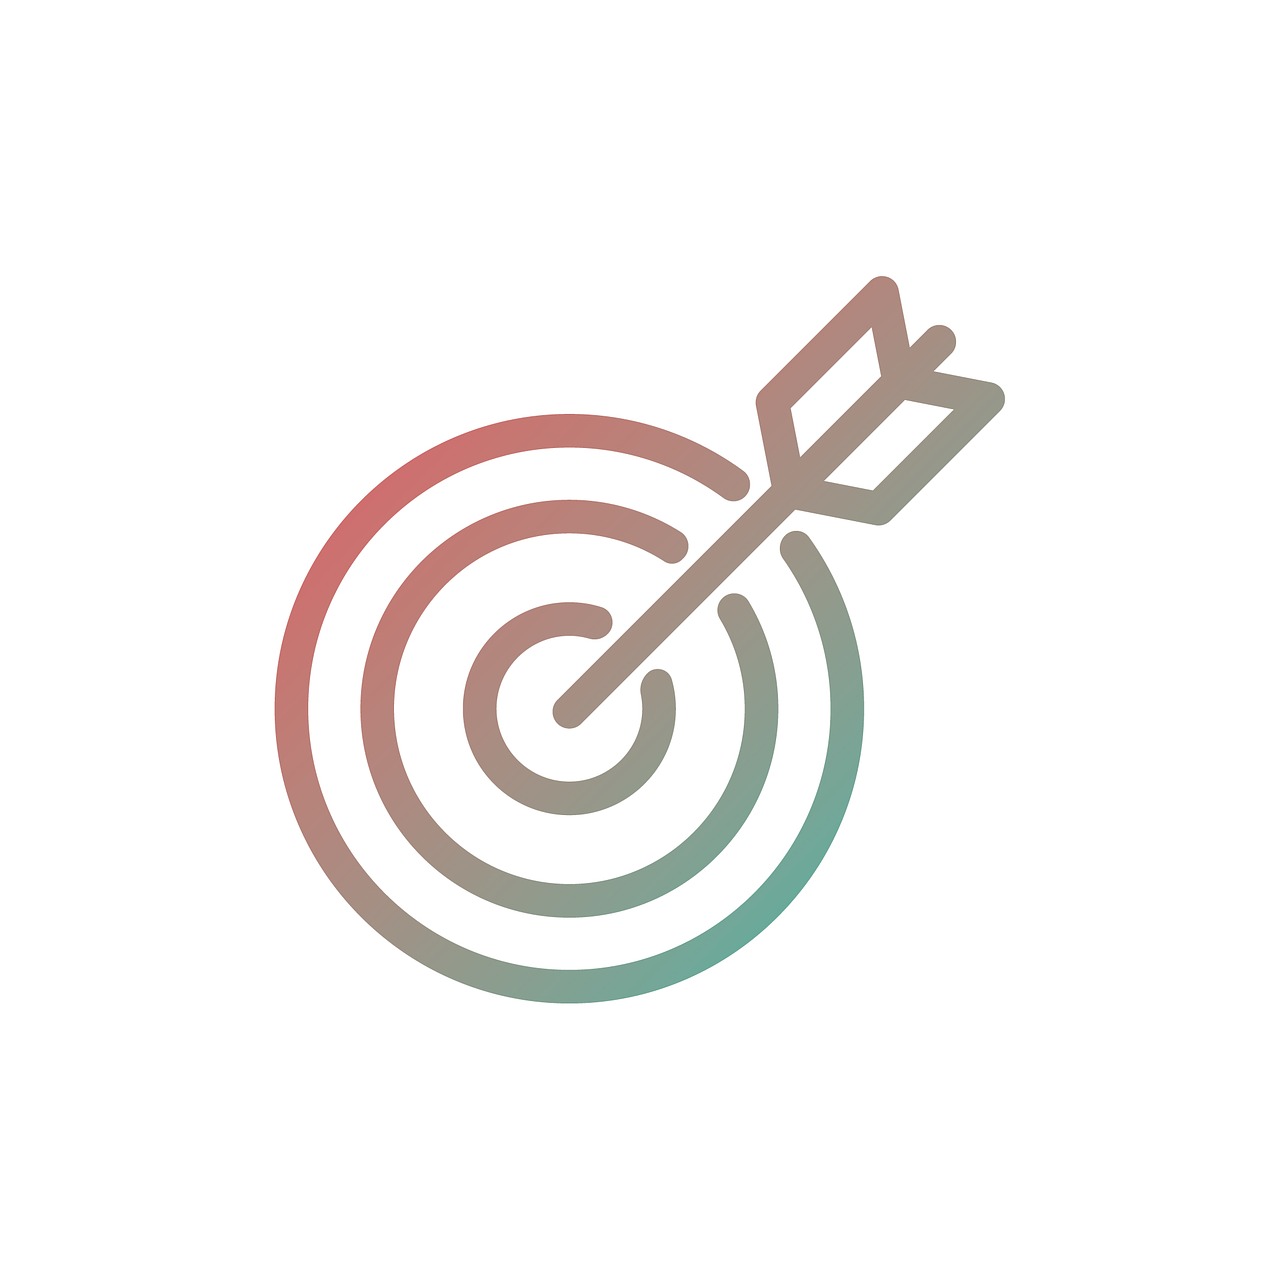 Target Icon Business Symbol  - Memed_Nurrohmad / Pixabay